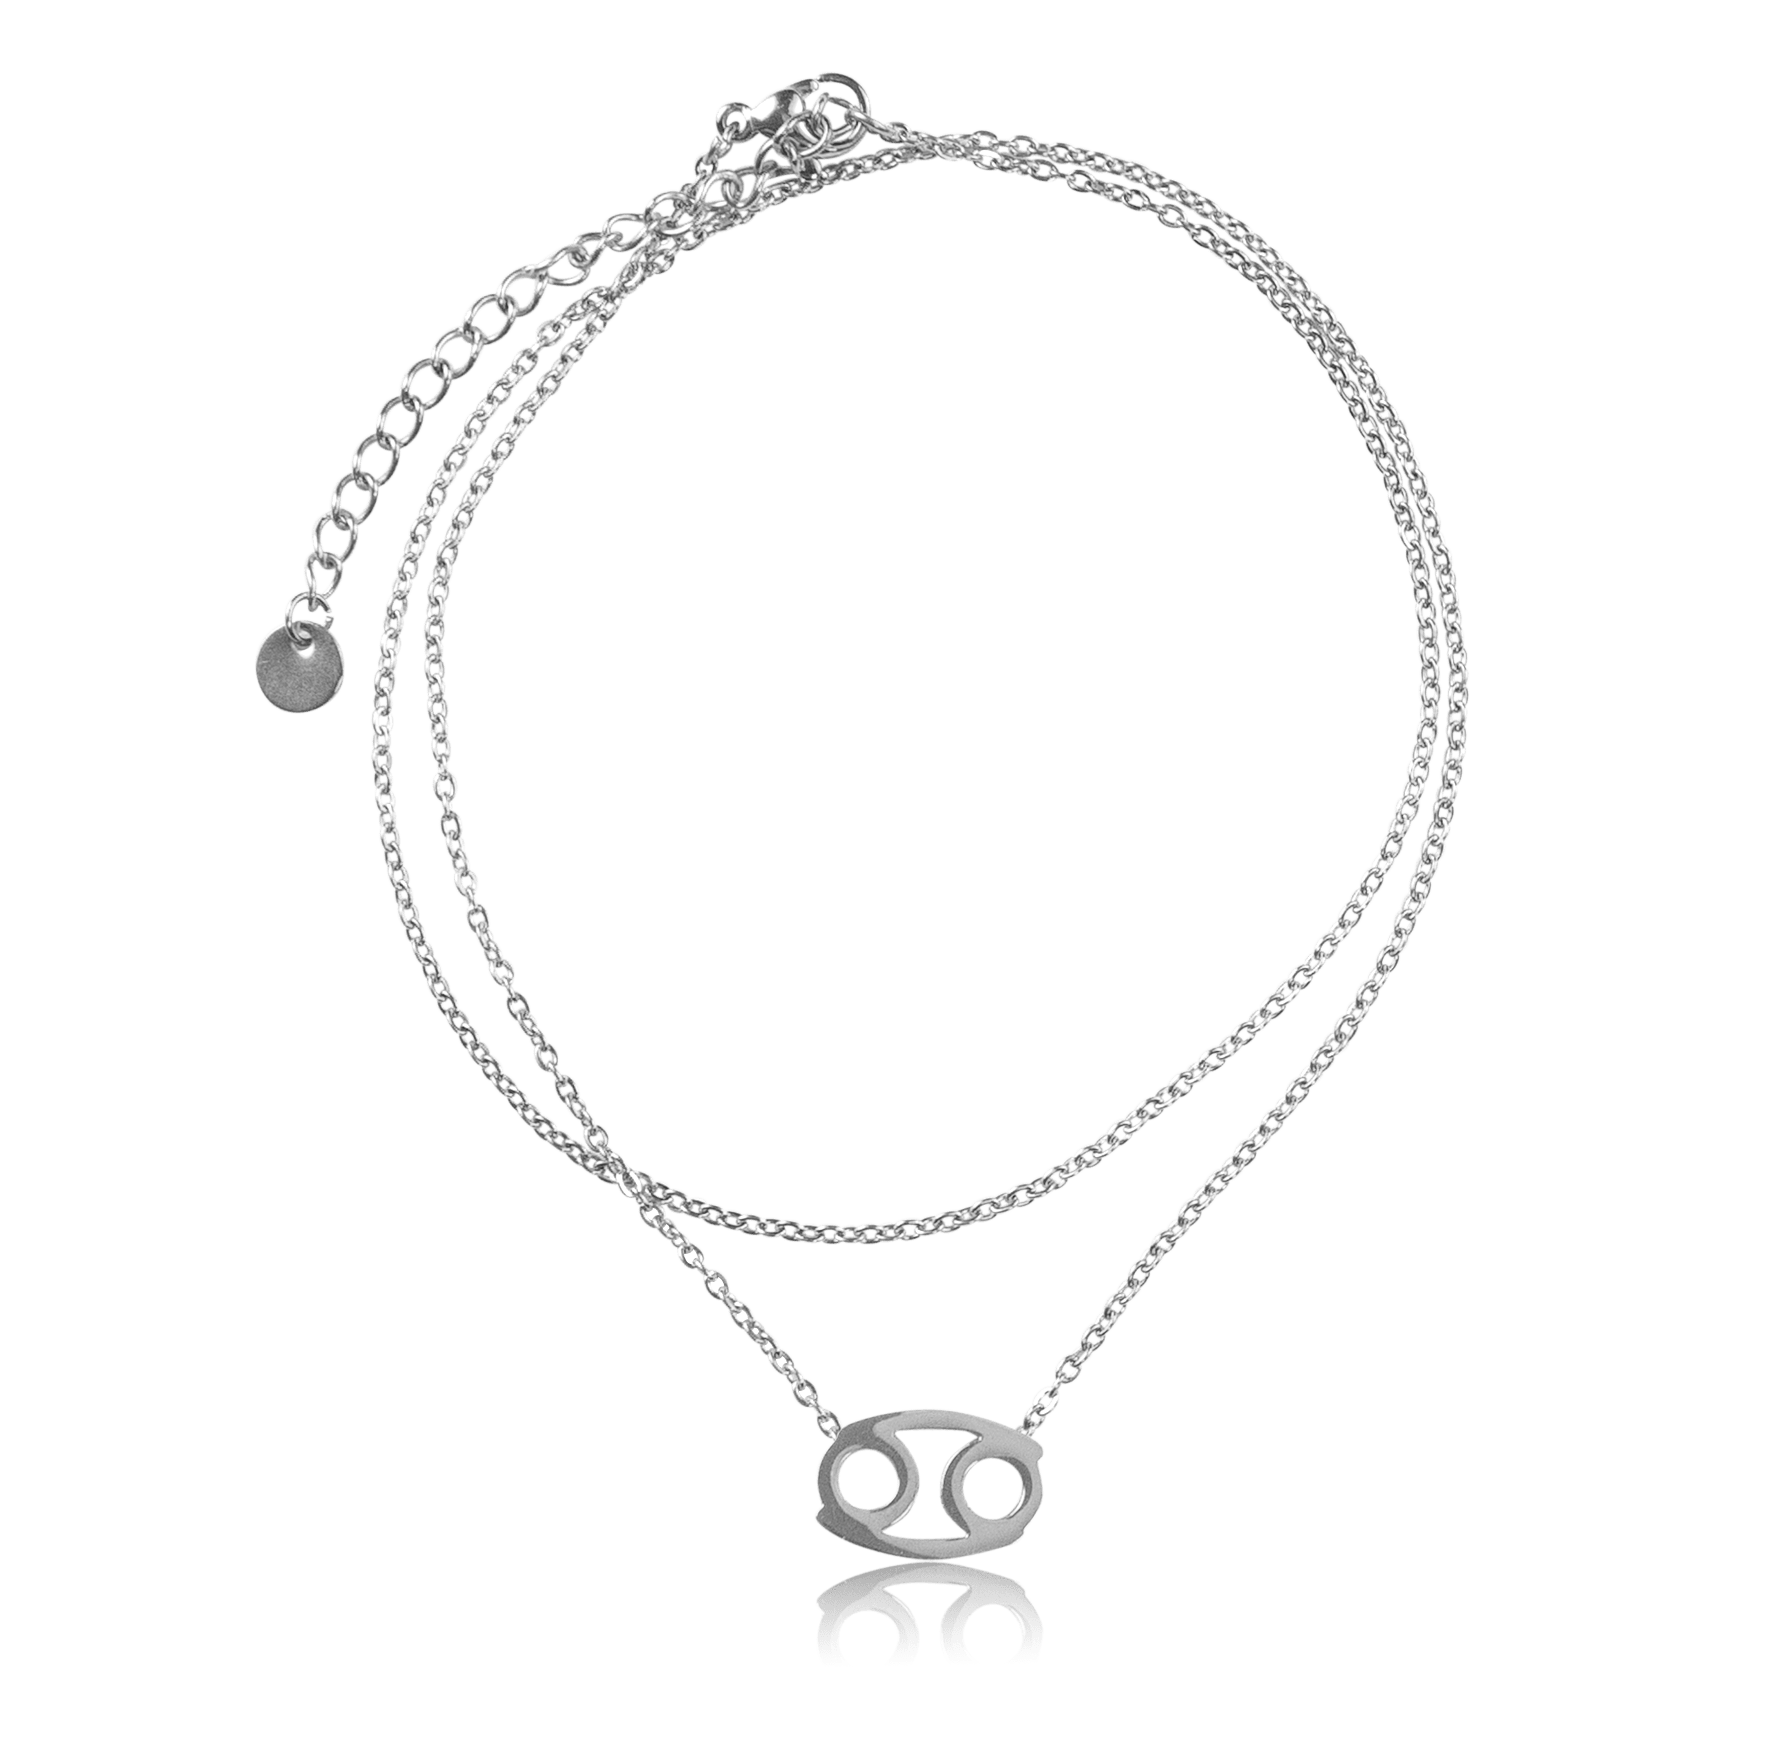 bianco rosso Bracelet Cancer - Bracelet cyprus greece jewelry gift free shipping europe worldwide